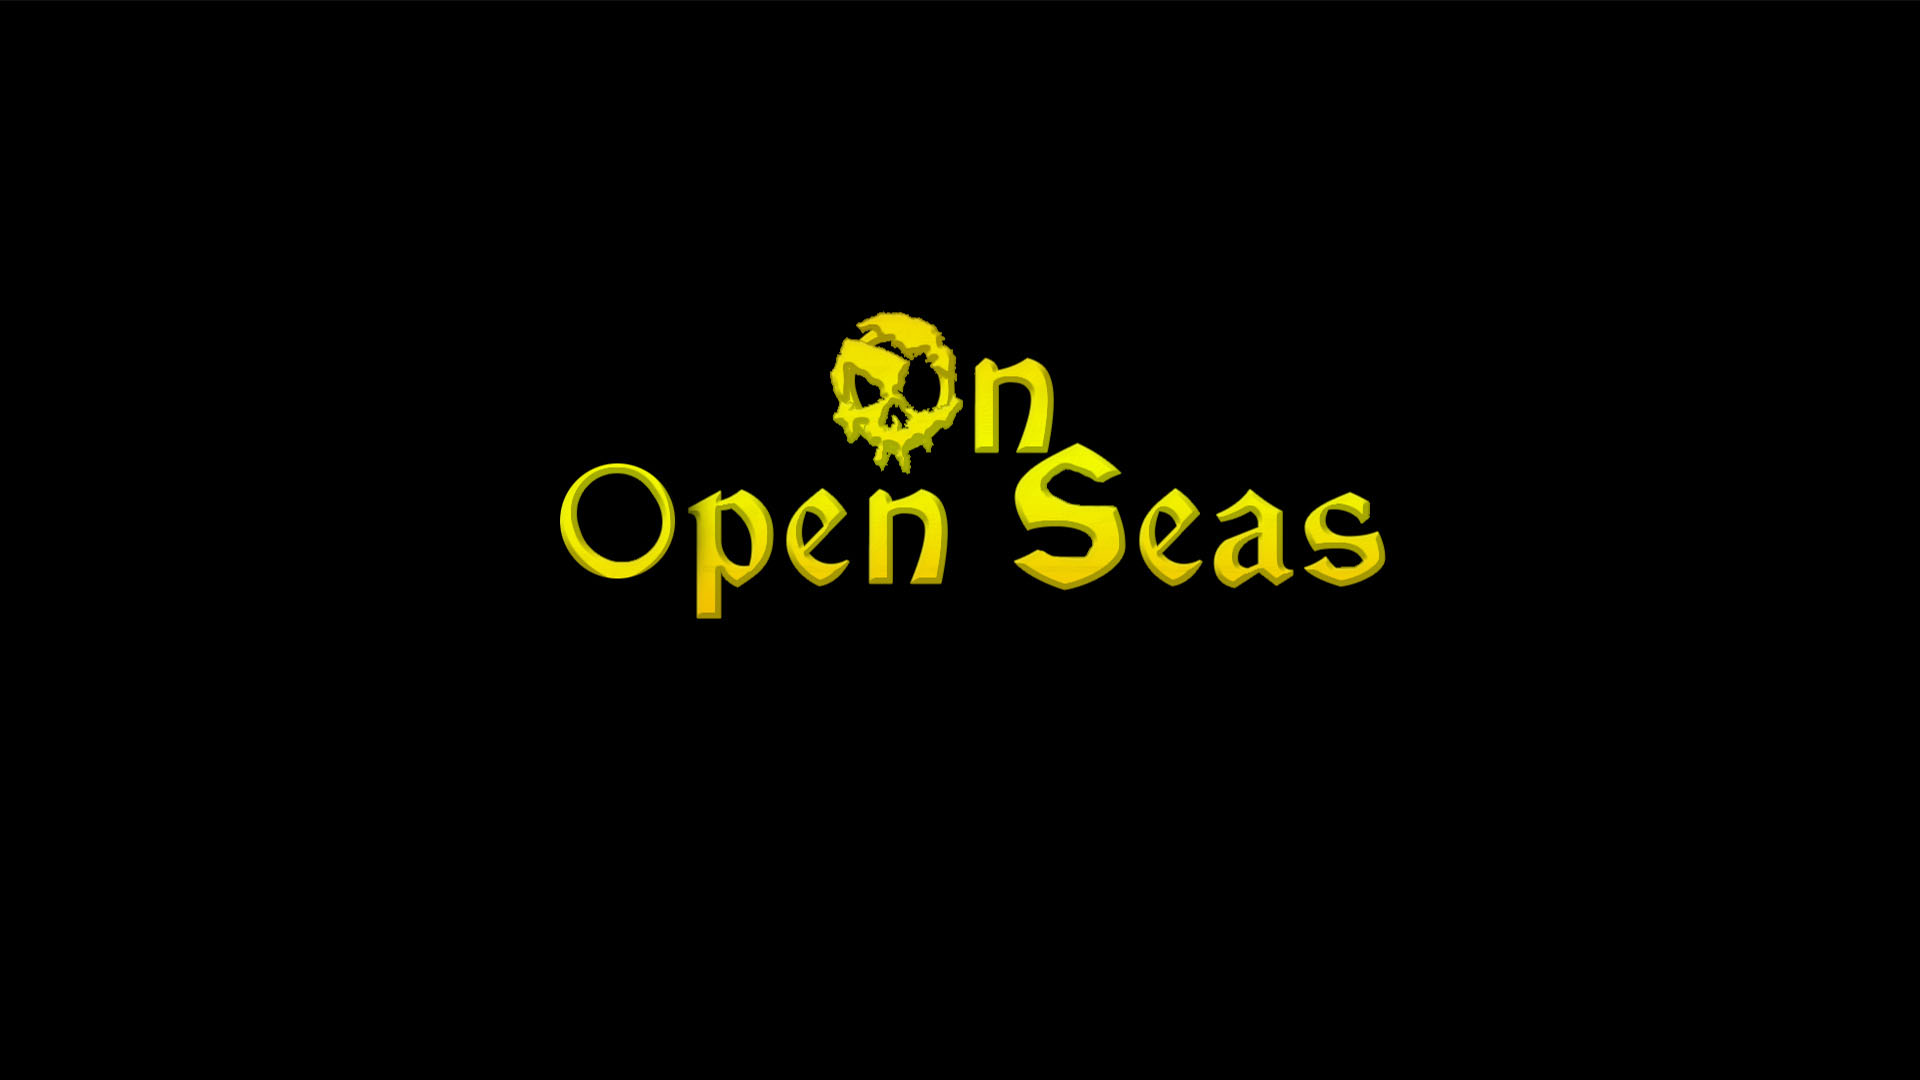 HoD: On open seas screenshot